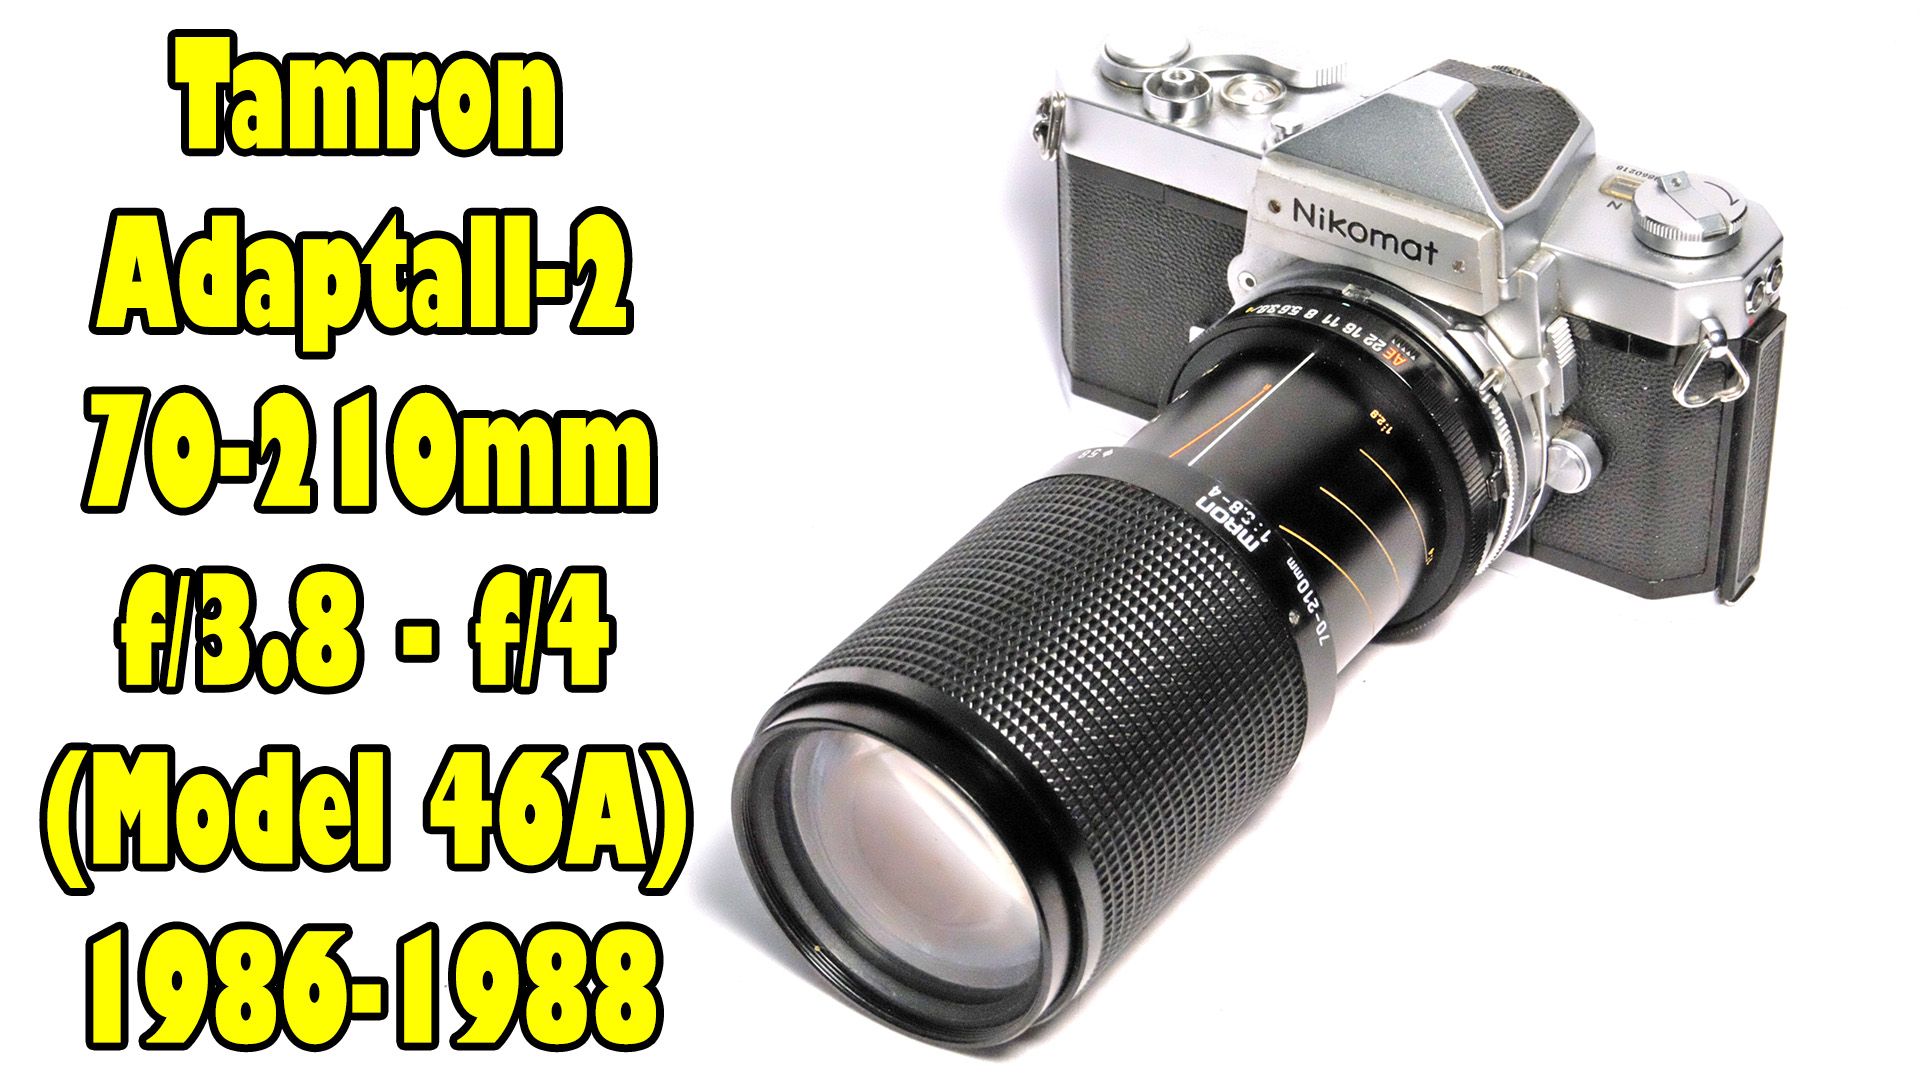 Tamron Adaptall-2 70-210mm f/3.8-4 (Model 46A, 1986-1988)